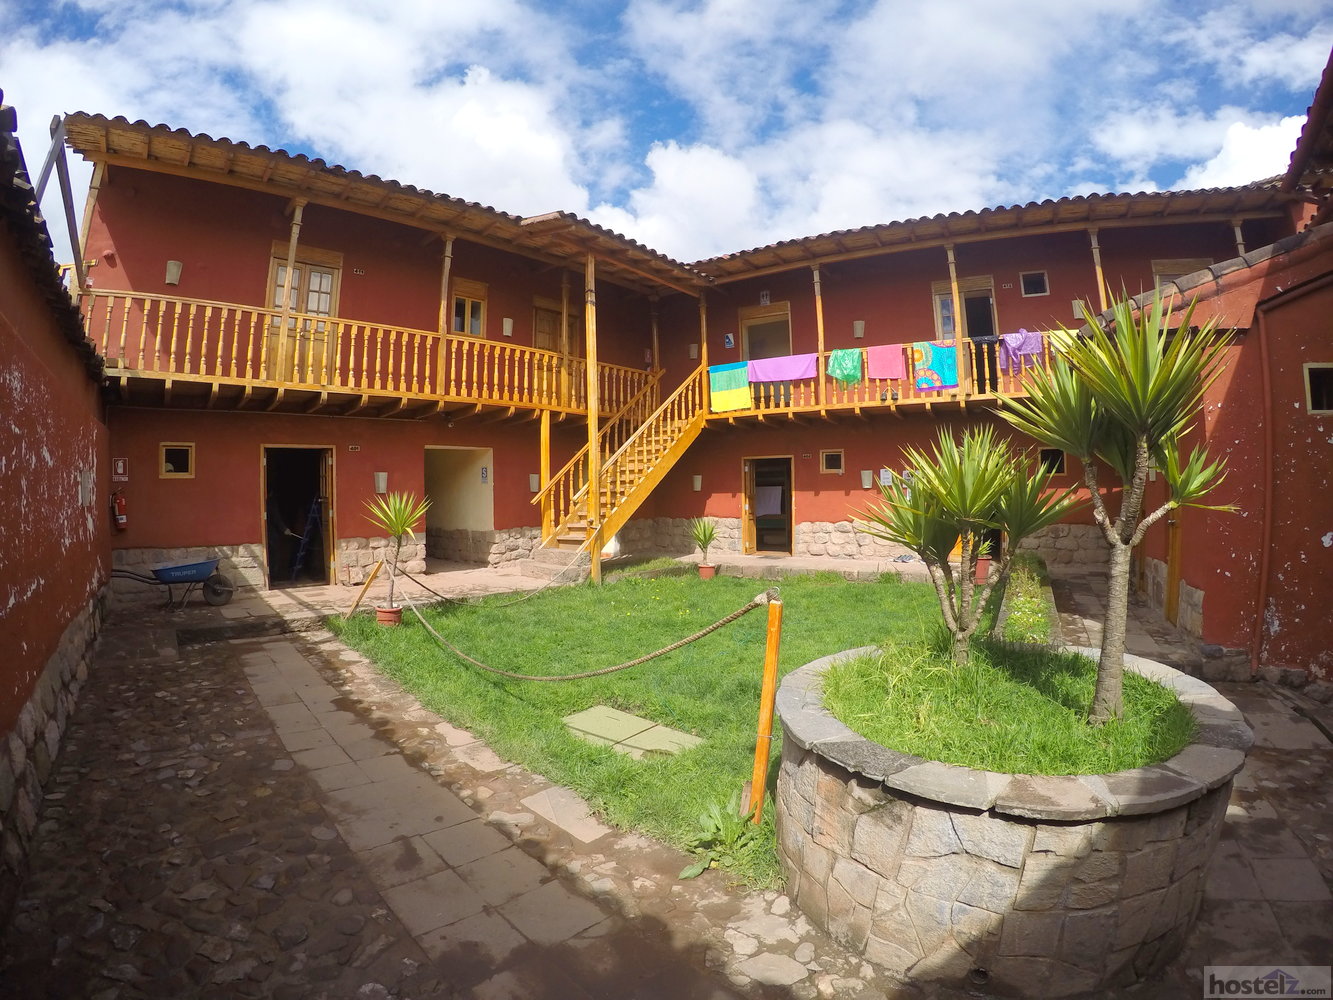 Loki Backpackers Hostel, Cusco